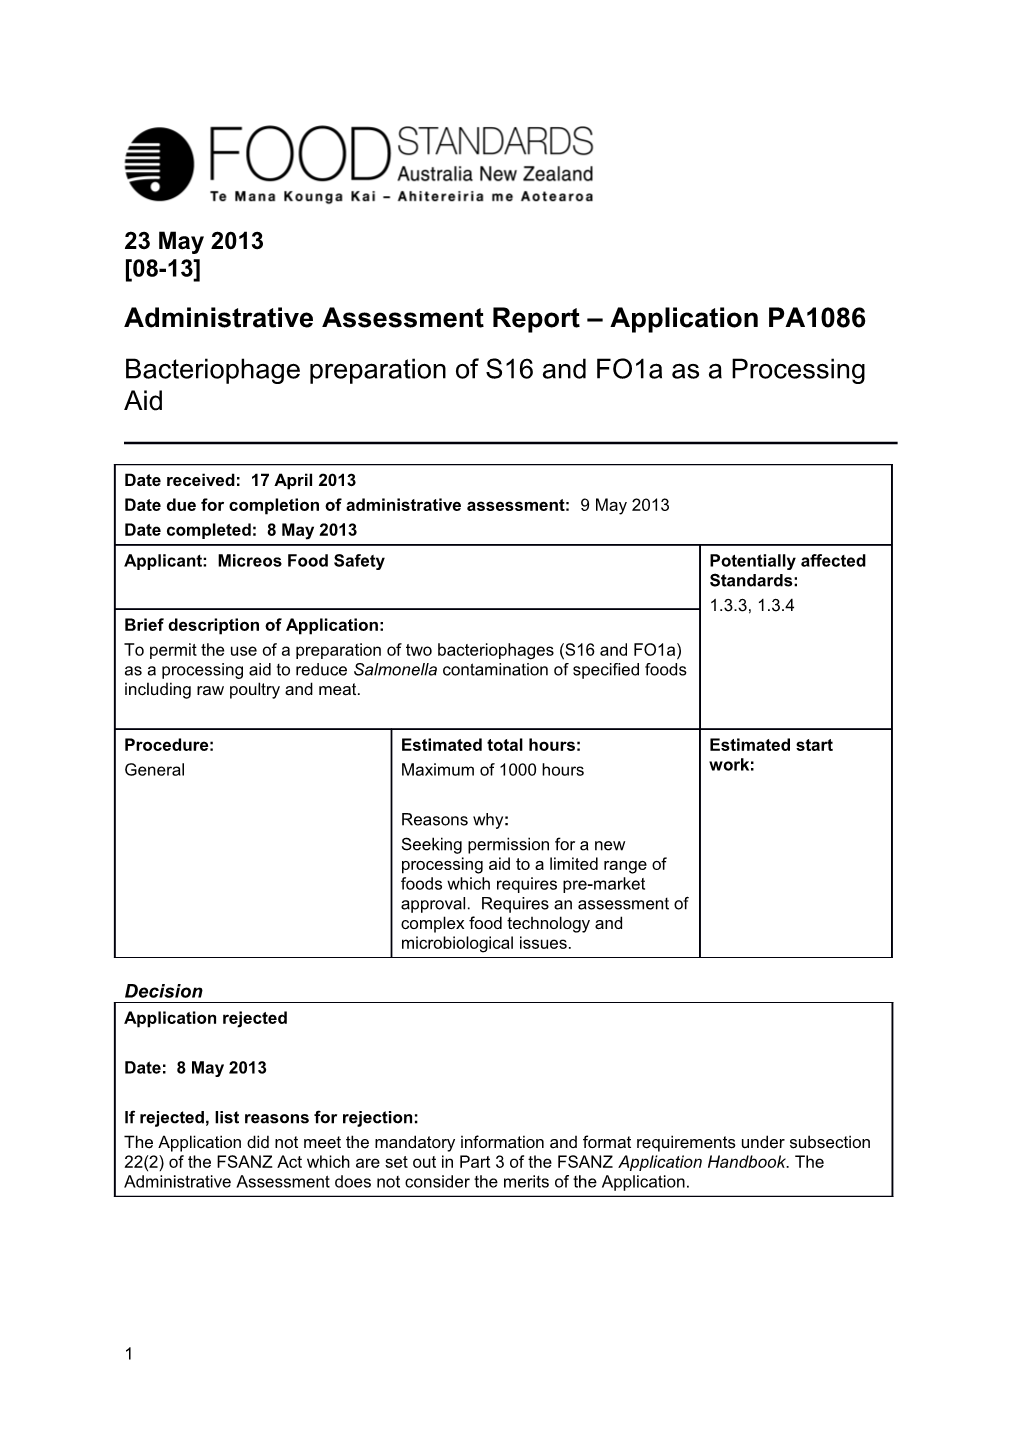 Administrative Assessment Report Applicationpa1086